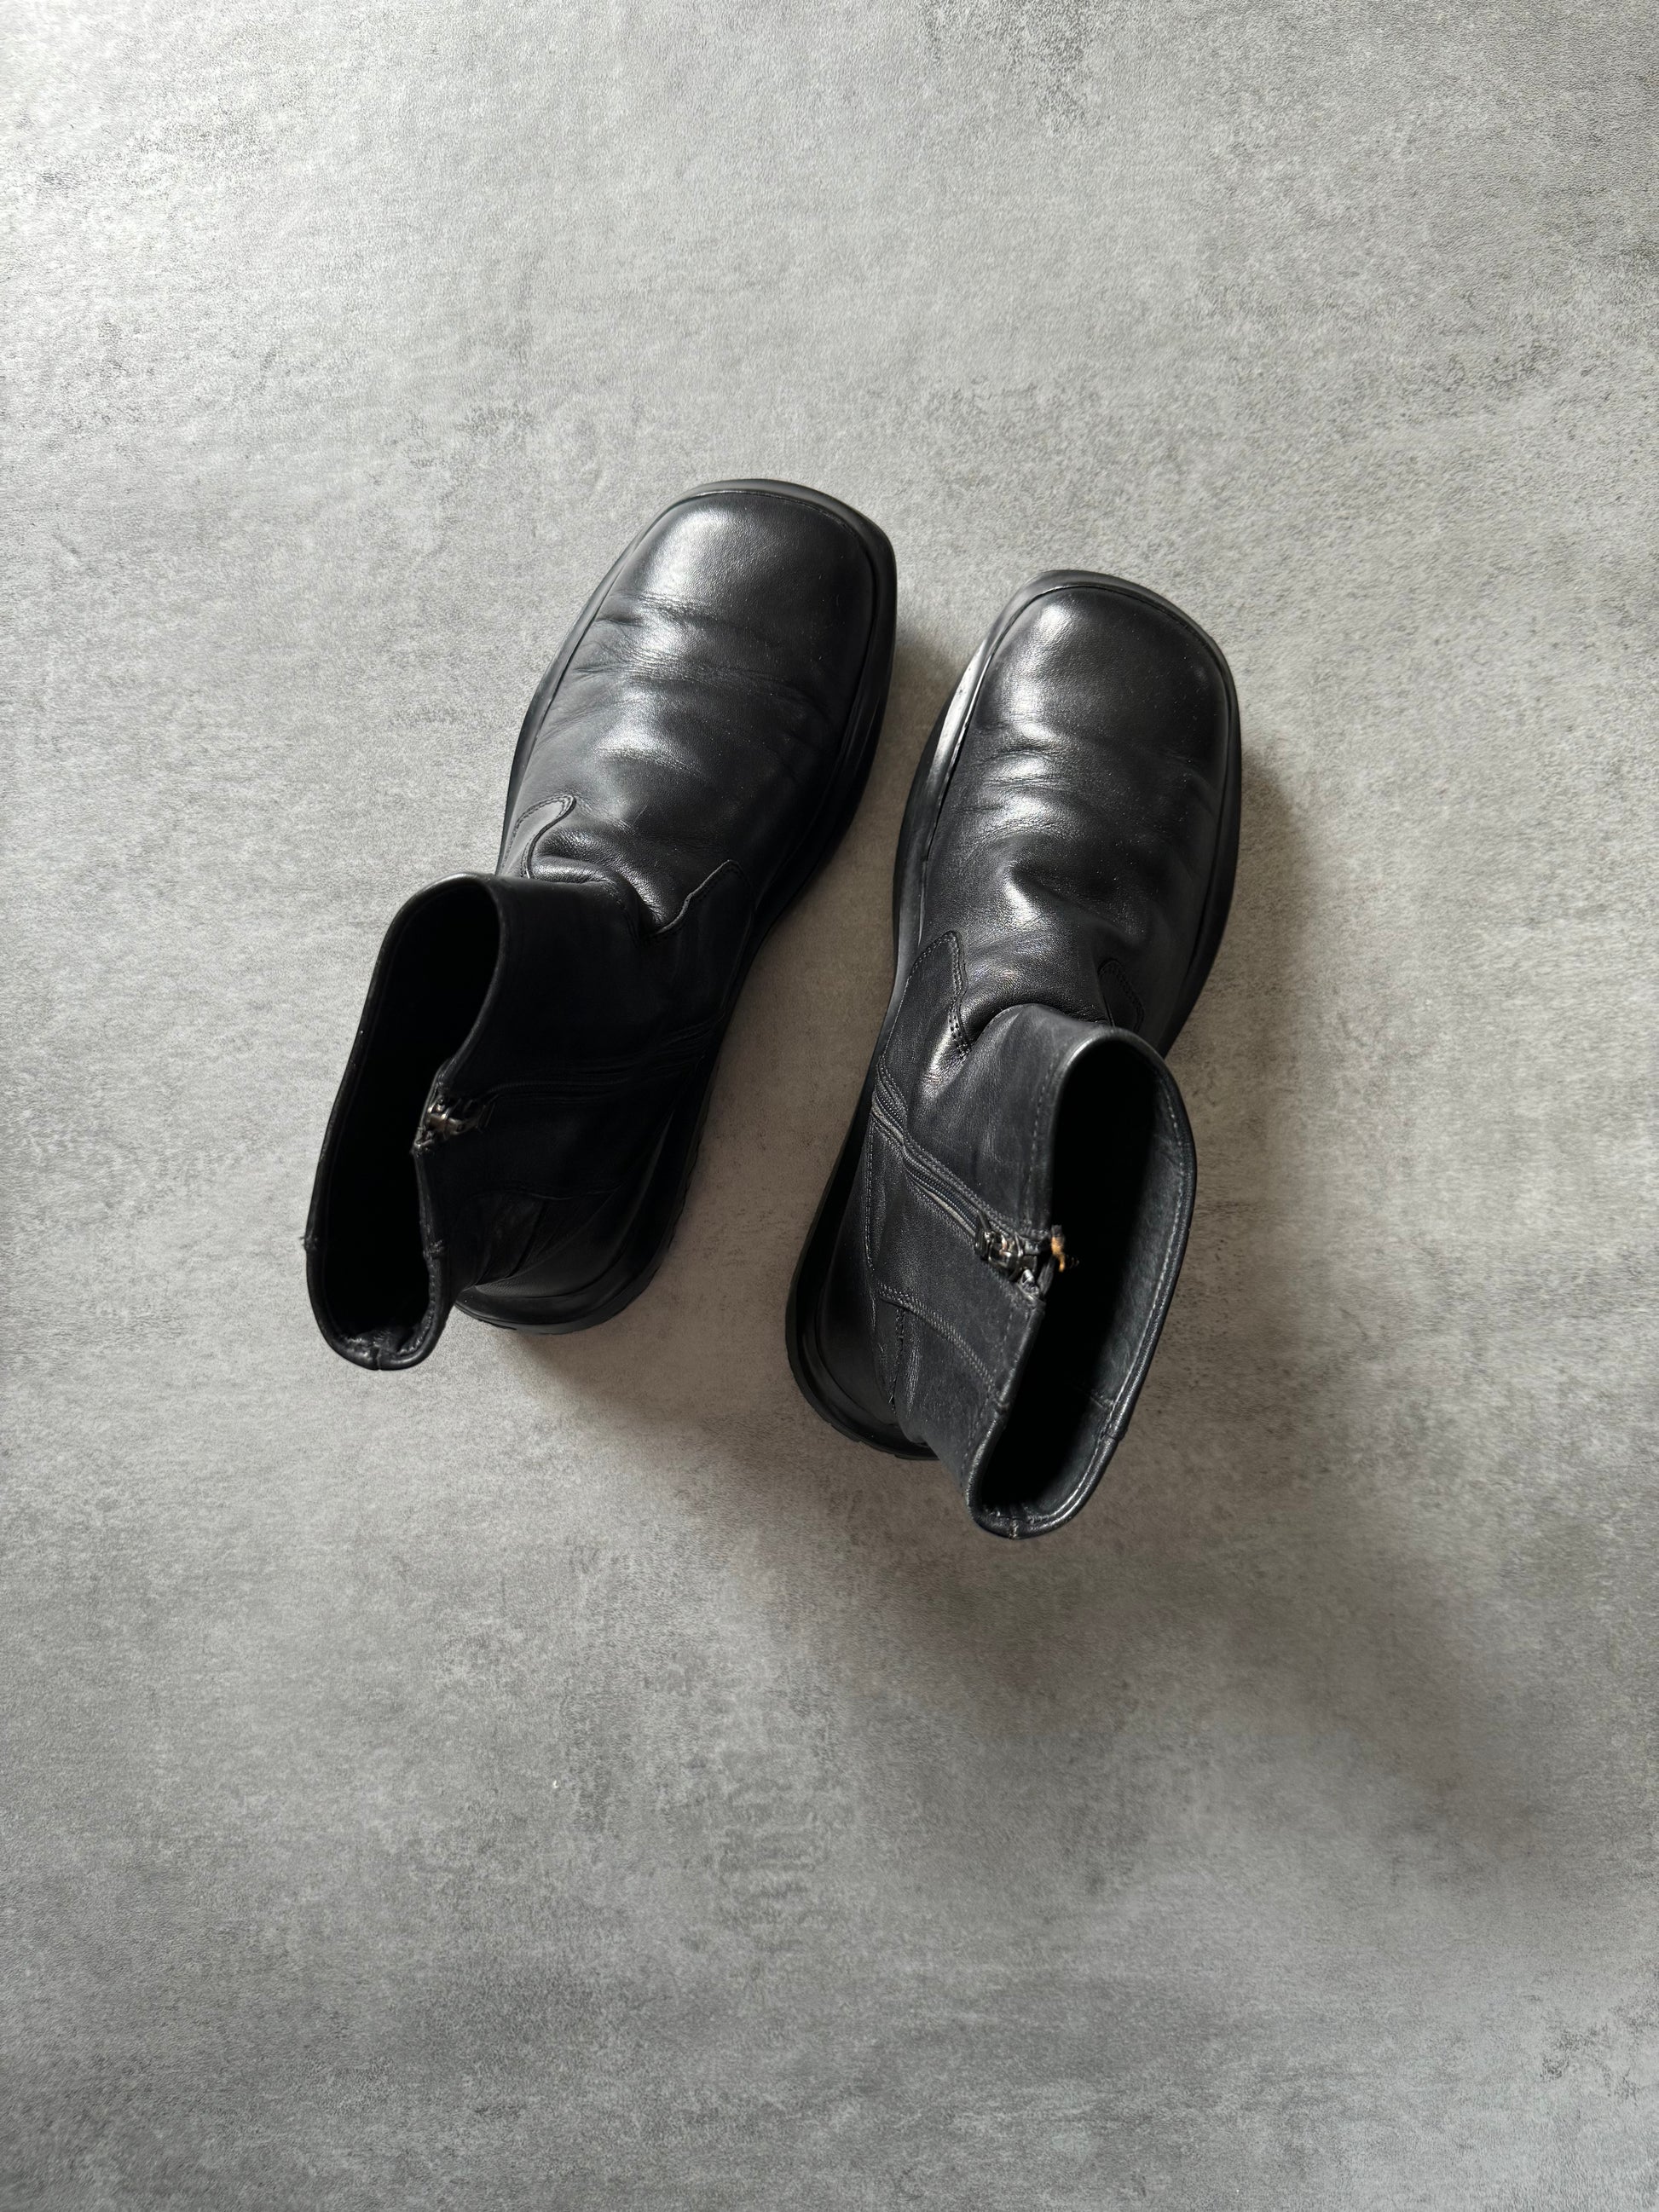 FW1999 Prada Black Leather Boots (39,5) - 6